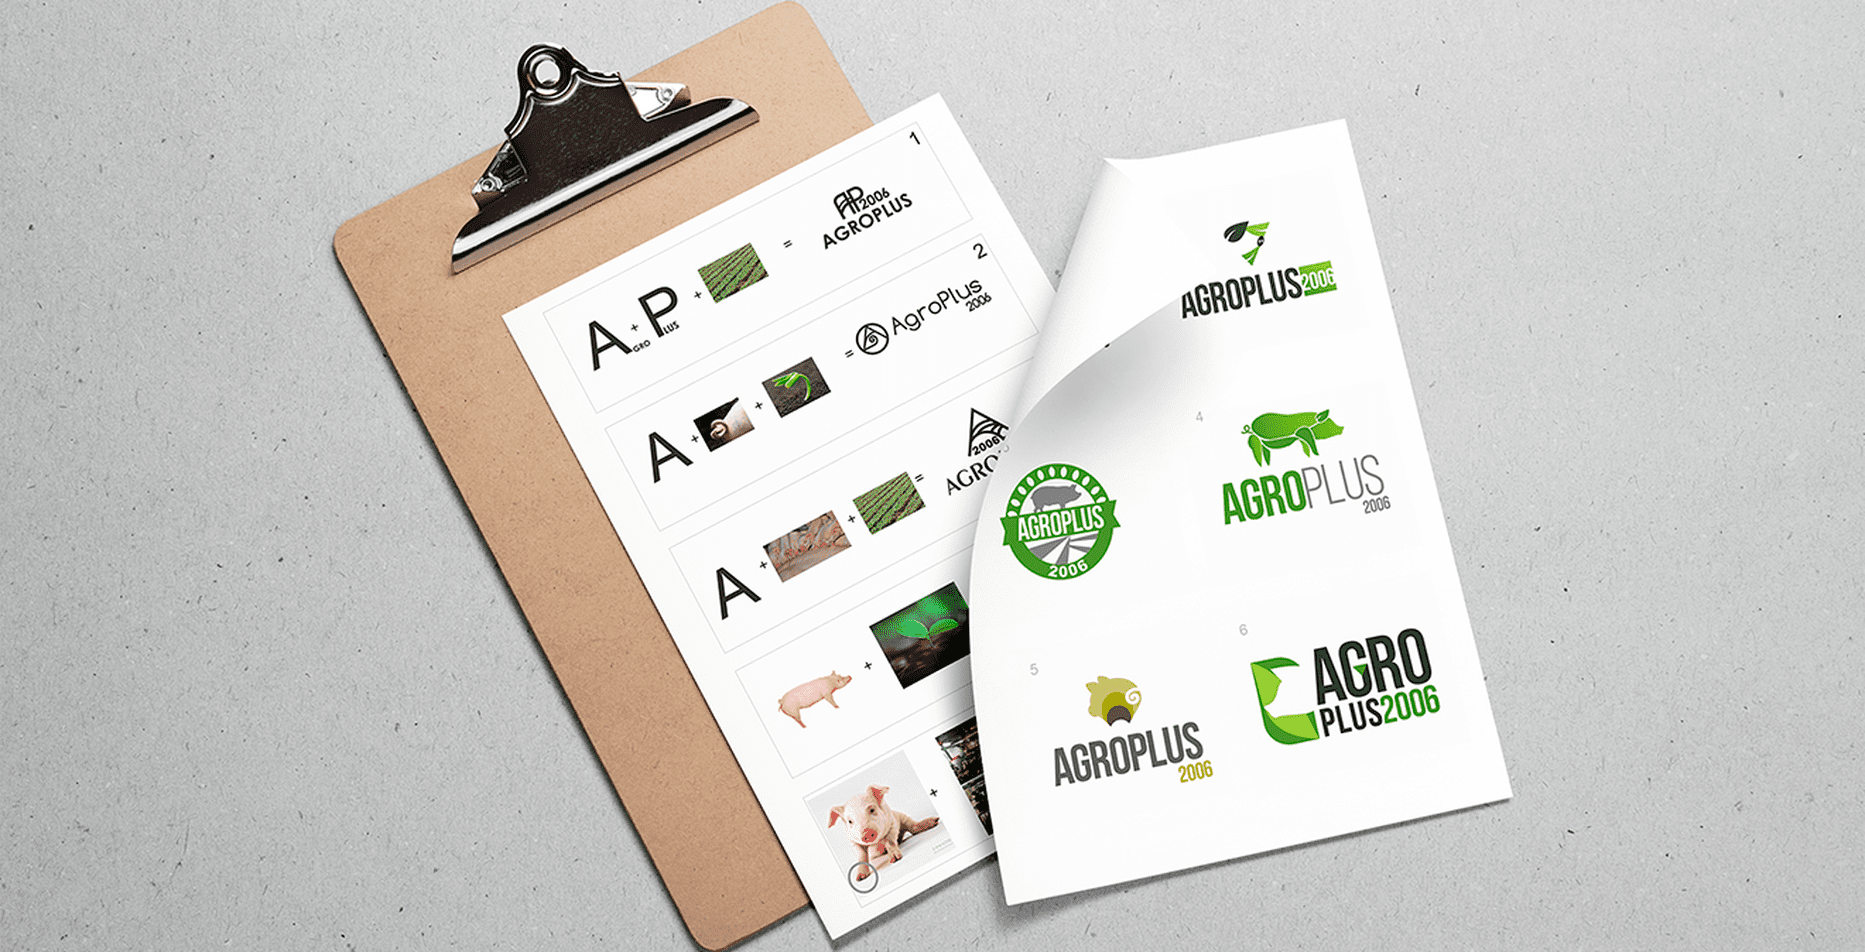 Case: logo design, landing and branding for Agroplus 2006 — Rubarb - Image - 2